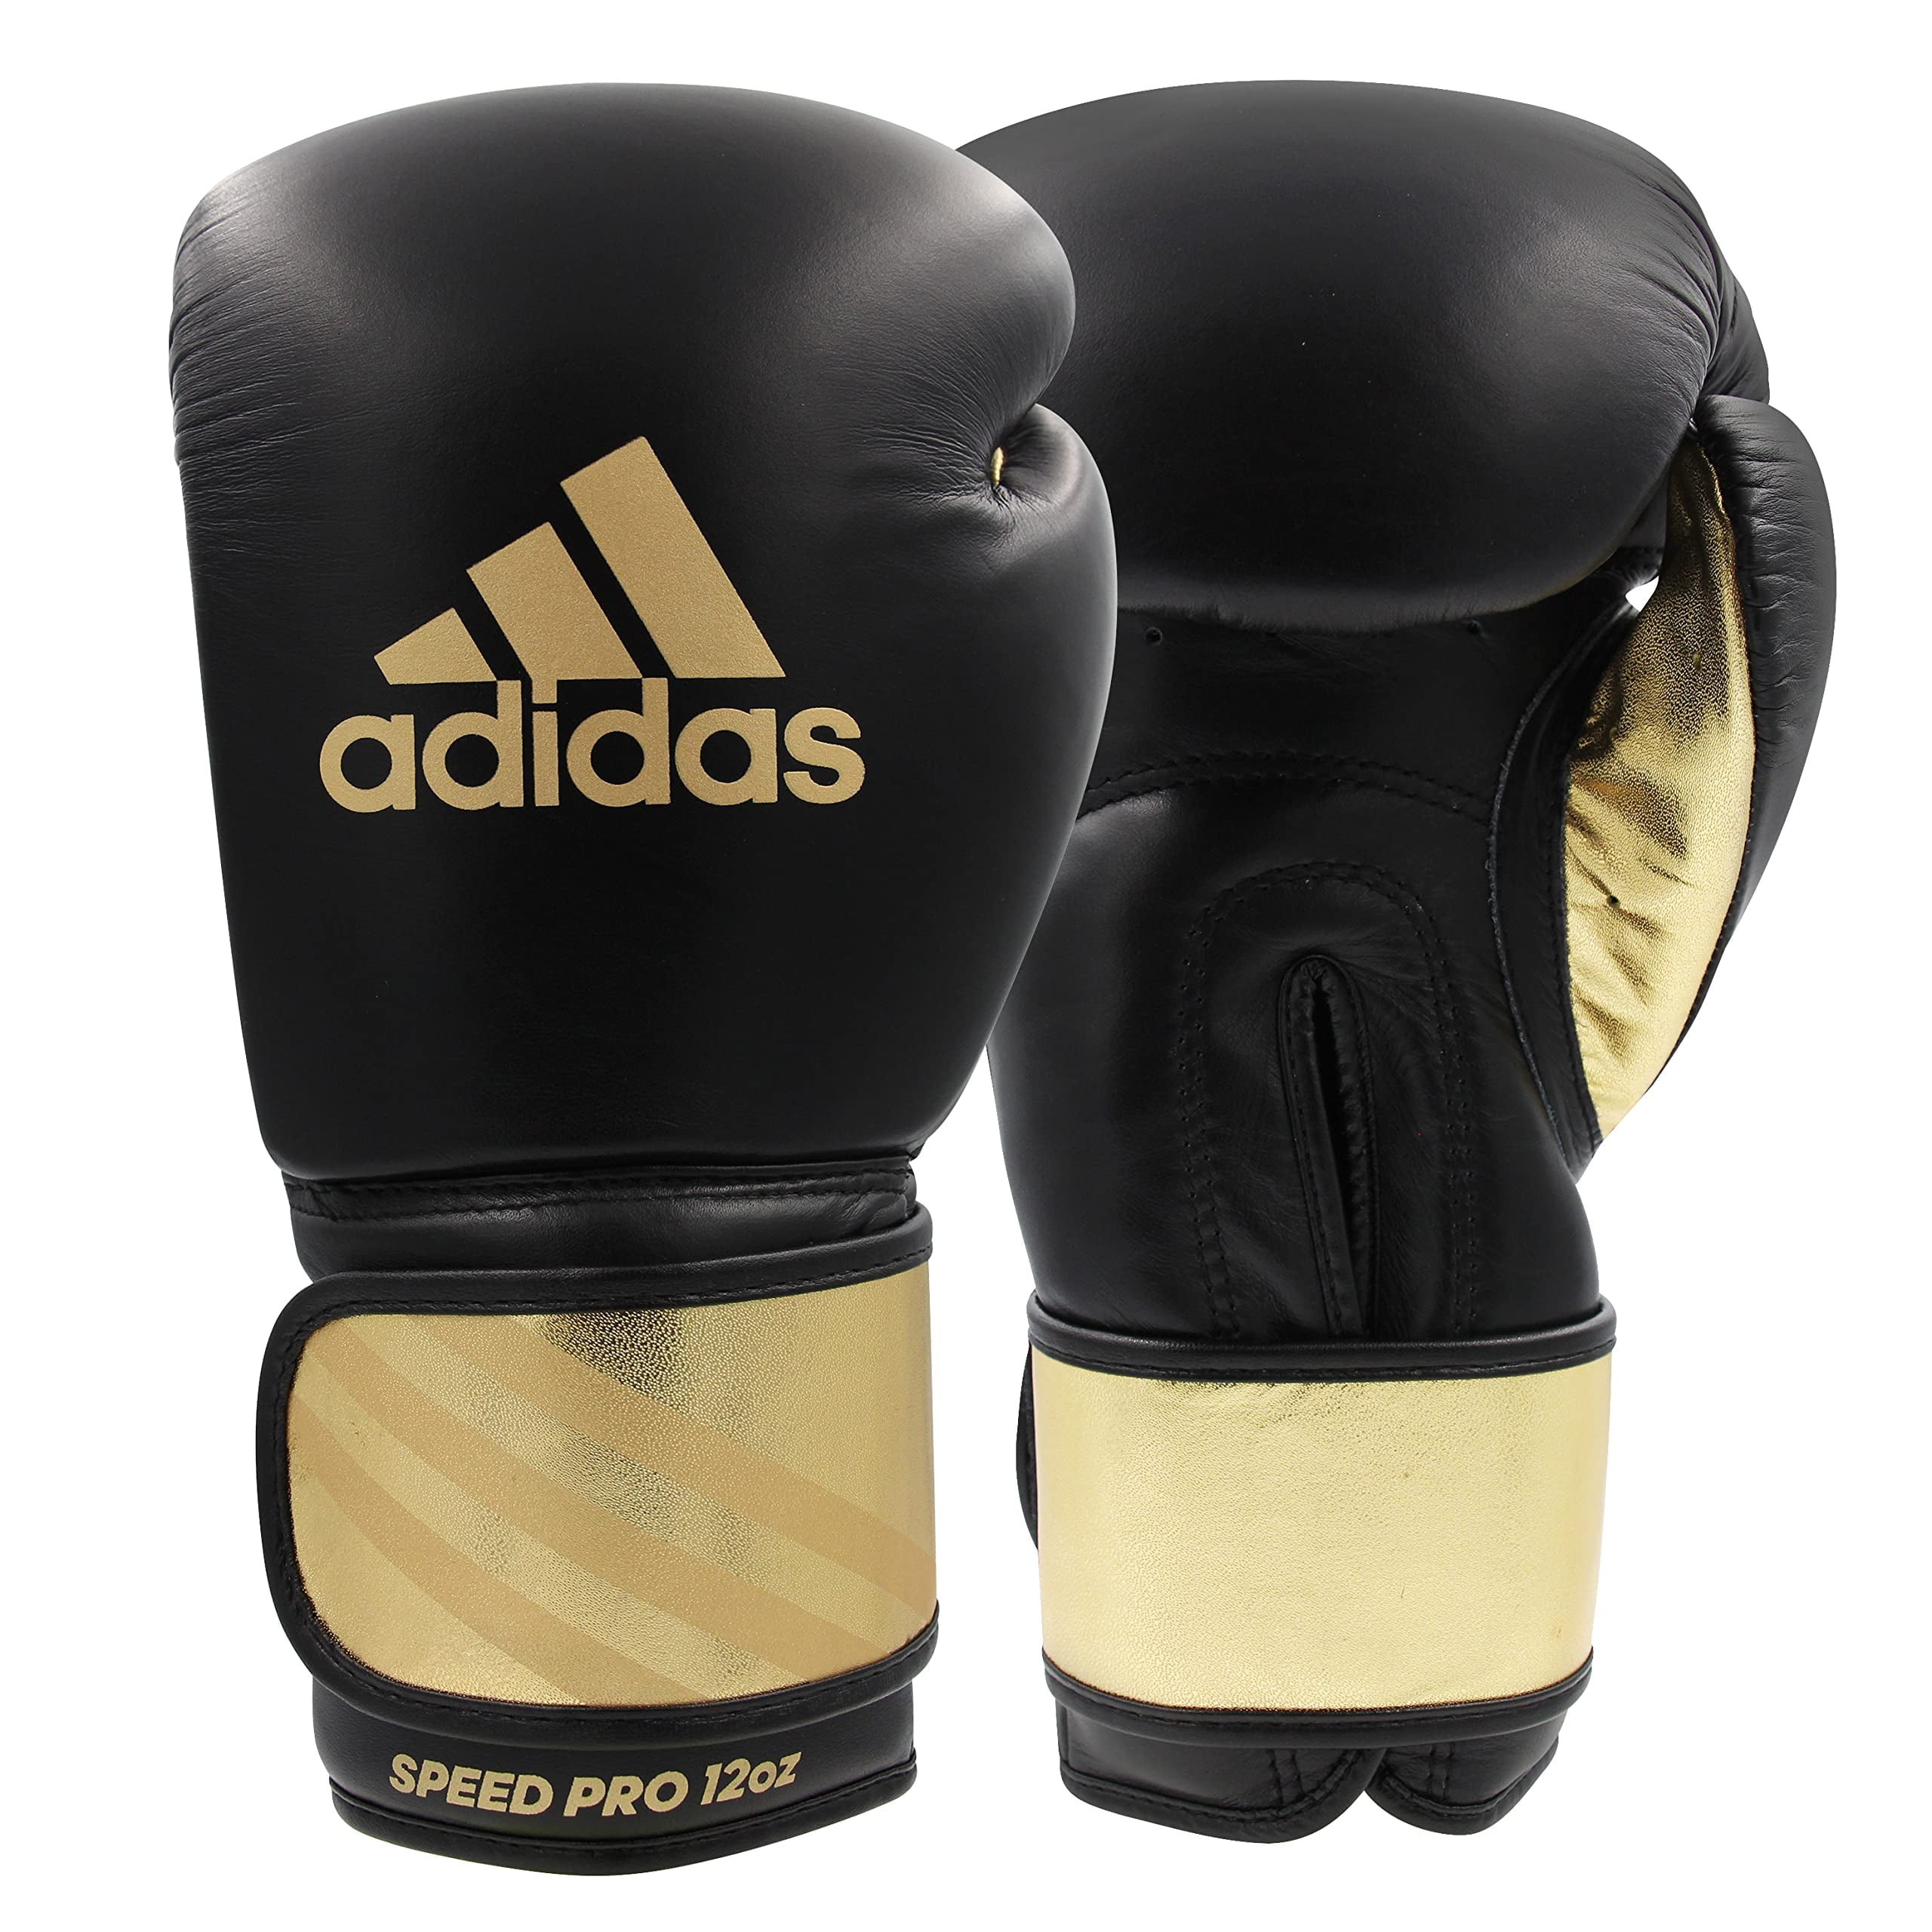 Adidas Adi-Speed 350 Pro Boxing Kickboxing Gloves for & Black/Gold Weight - Walmart.com